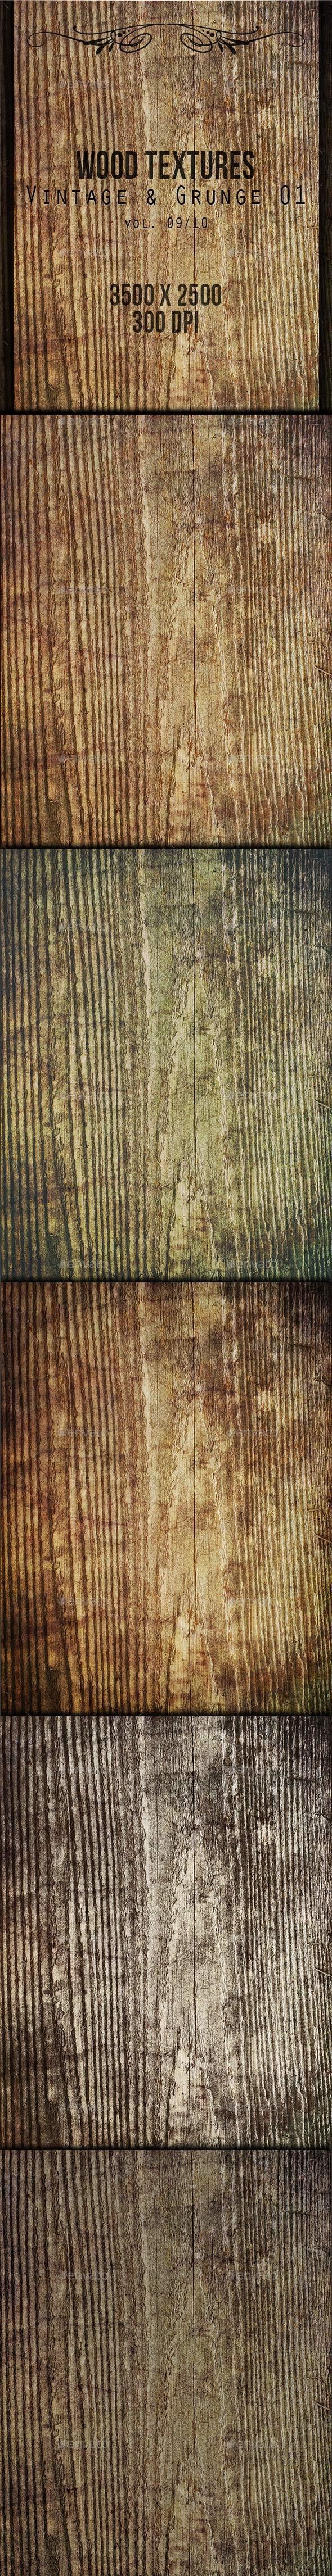 Wood textures vintage grunge01 vol.09 preview